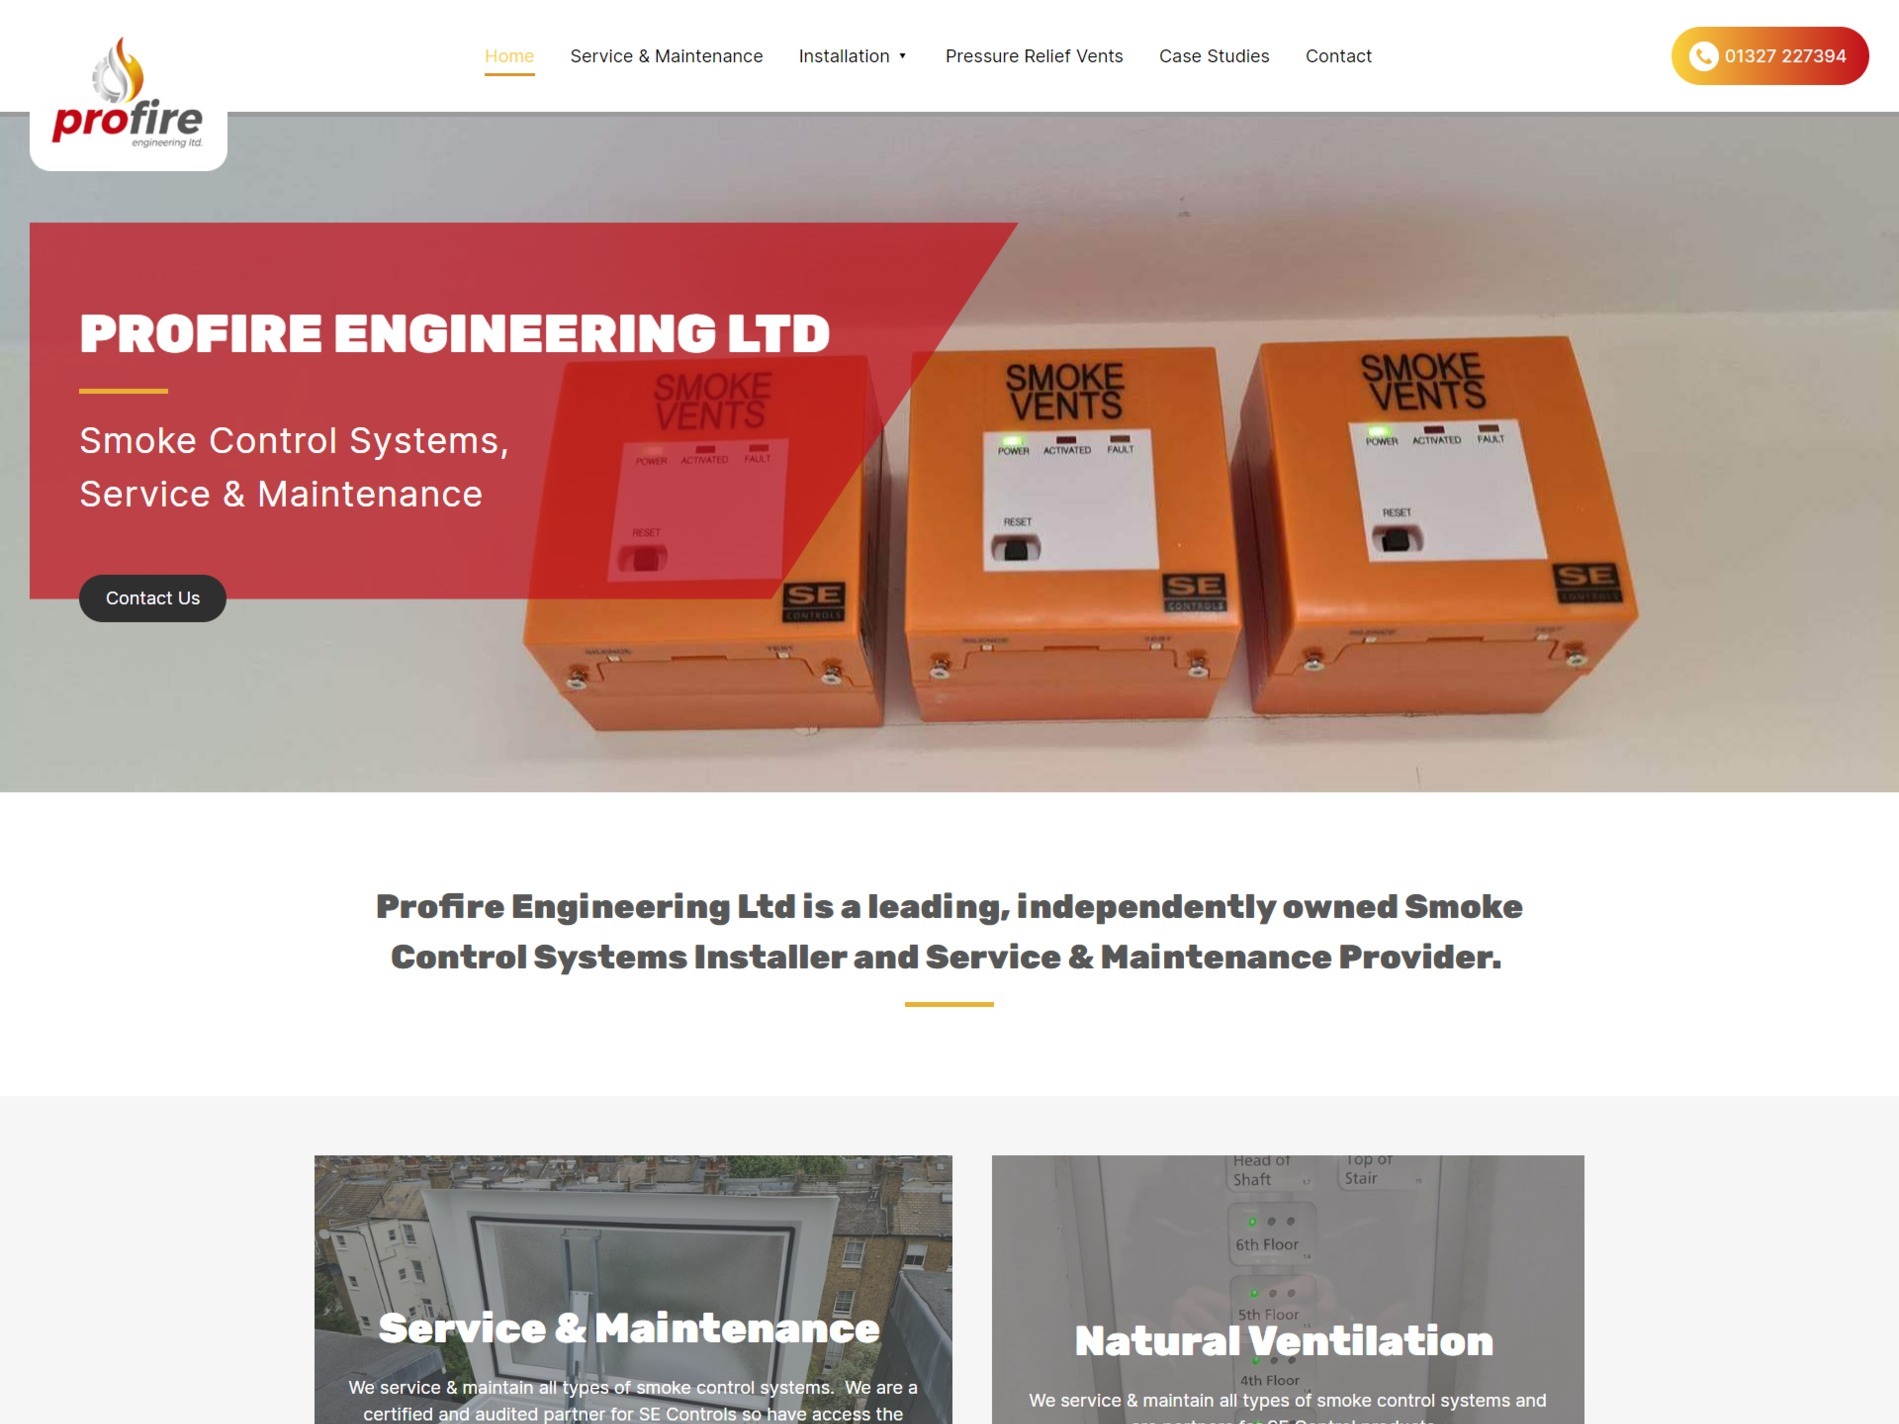 The redesign of Profire Engineering Ltd